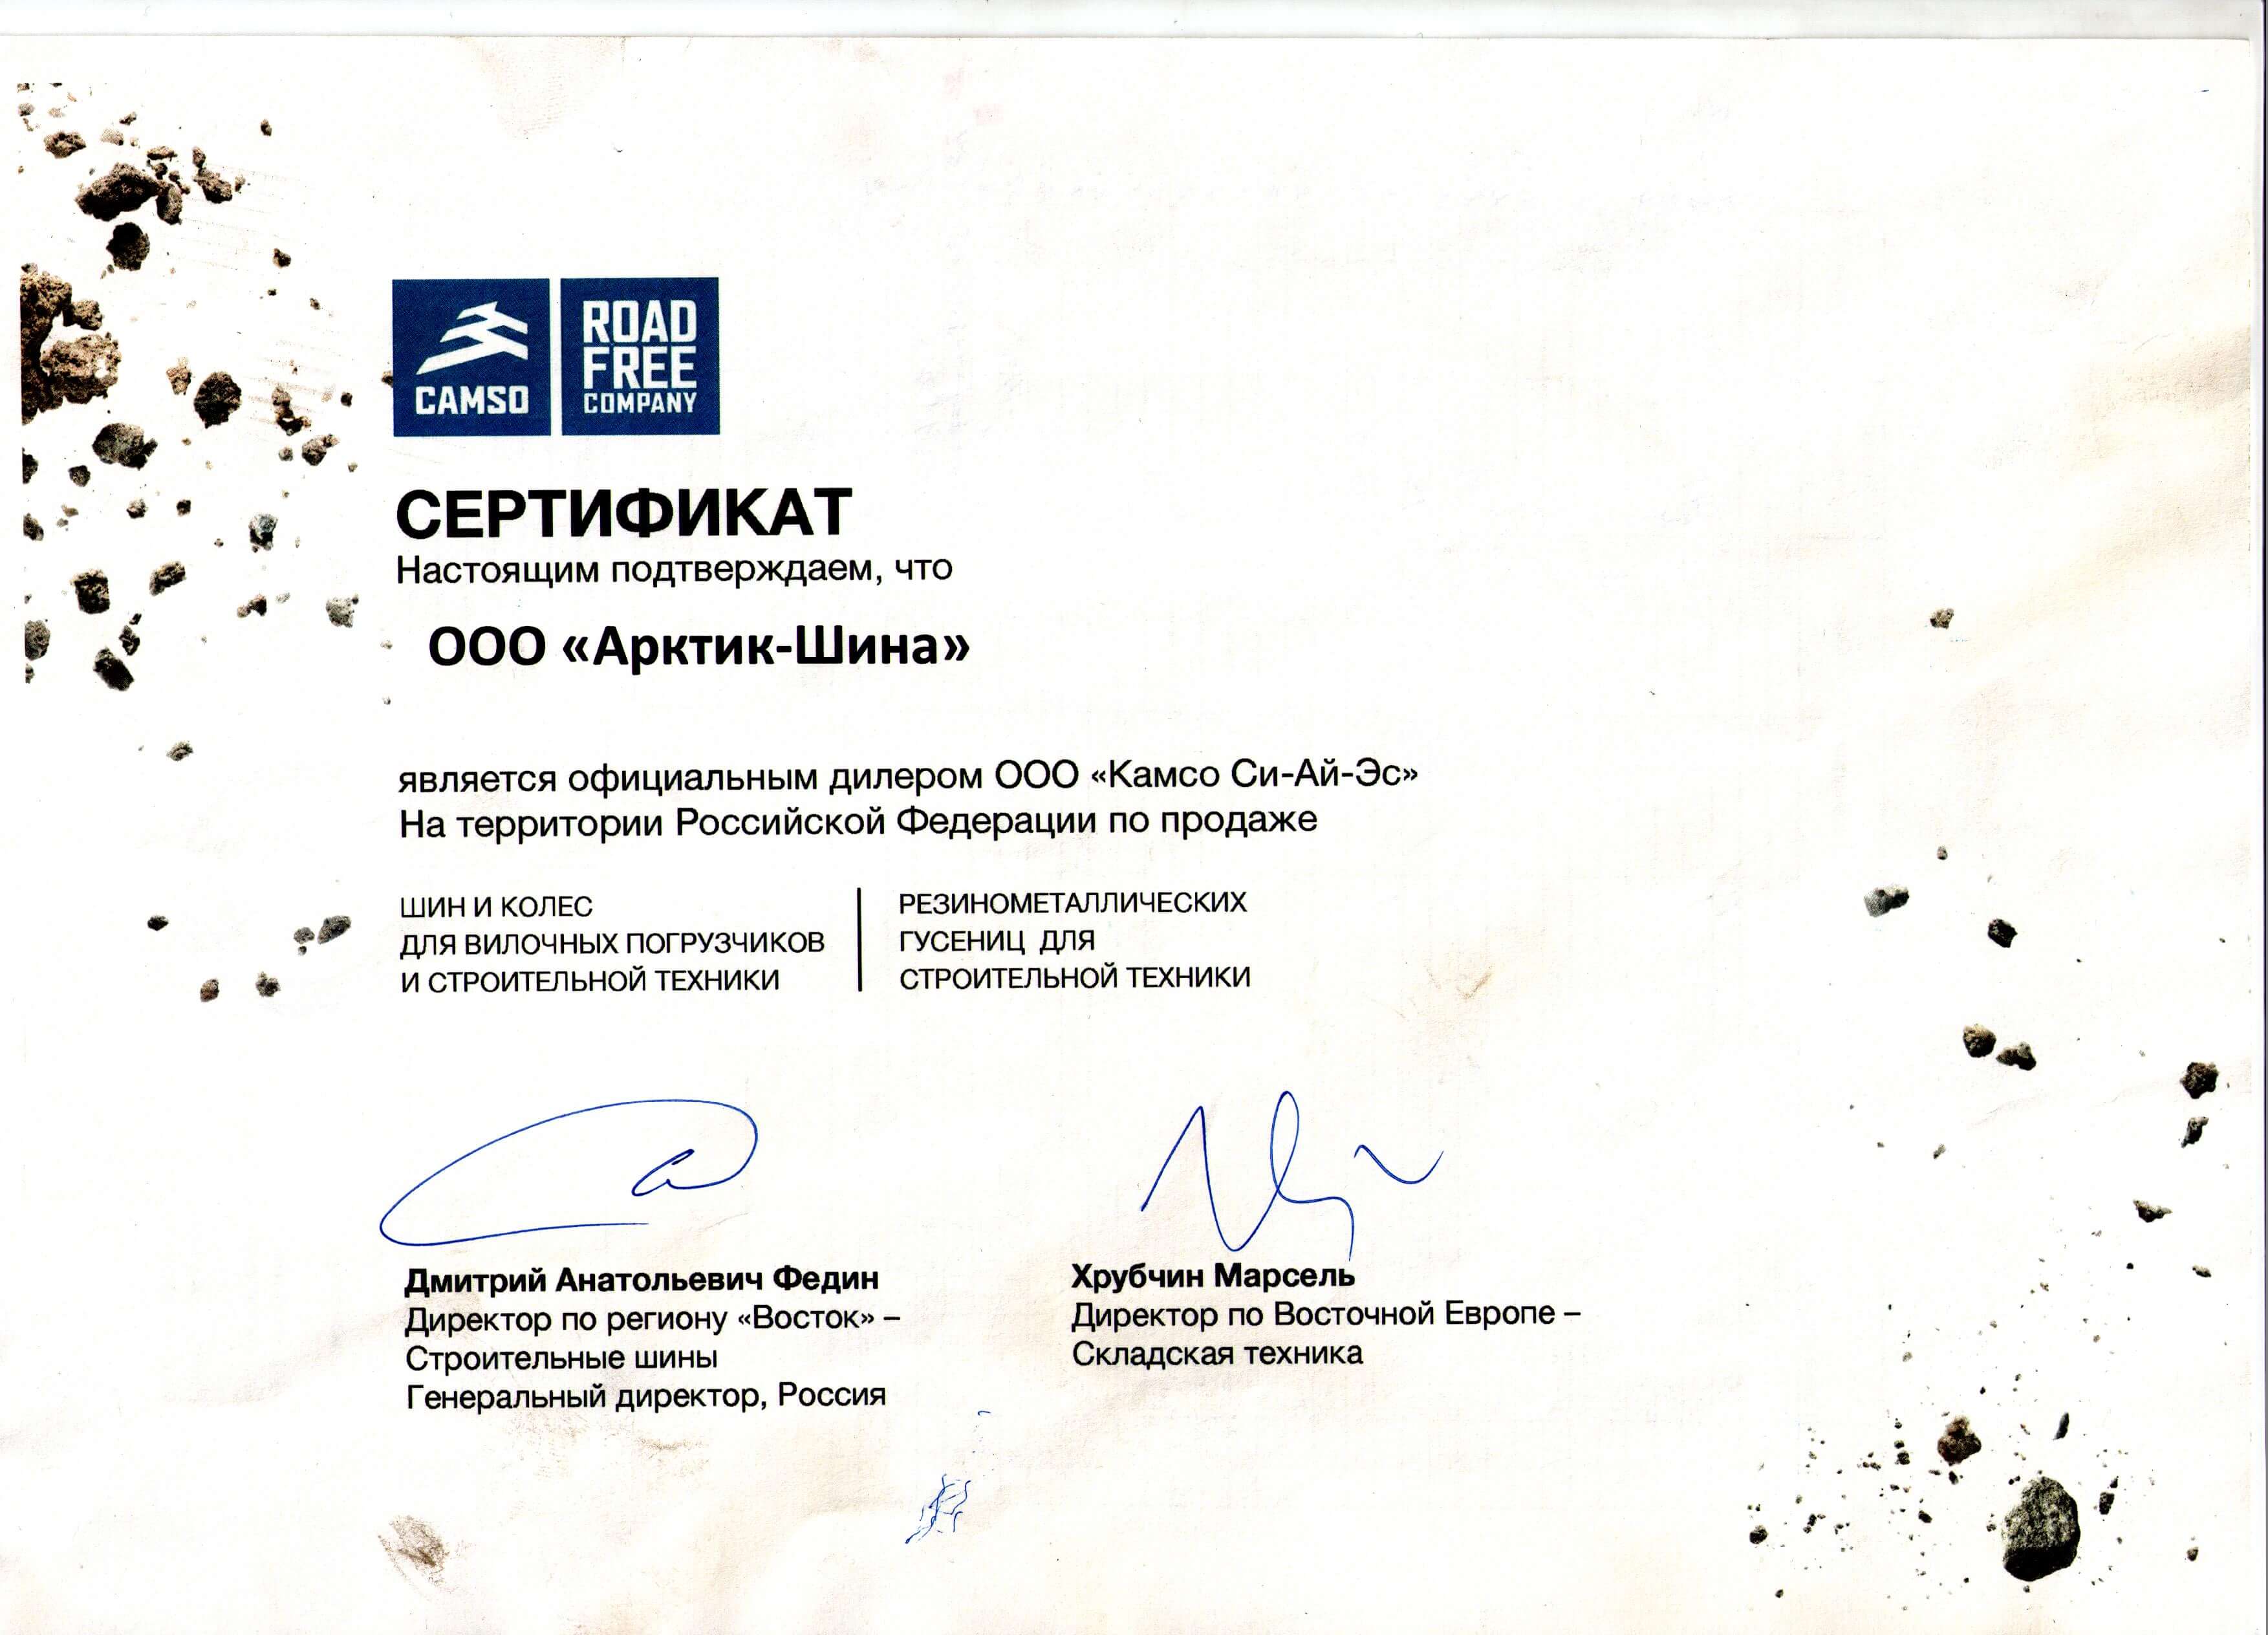 Сертификат Camso 001